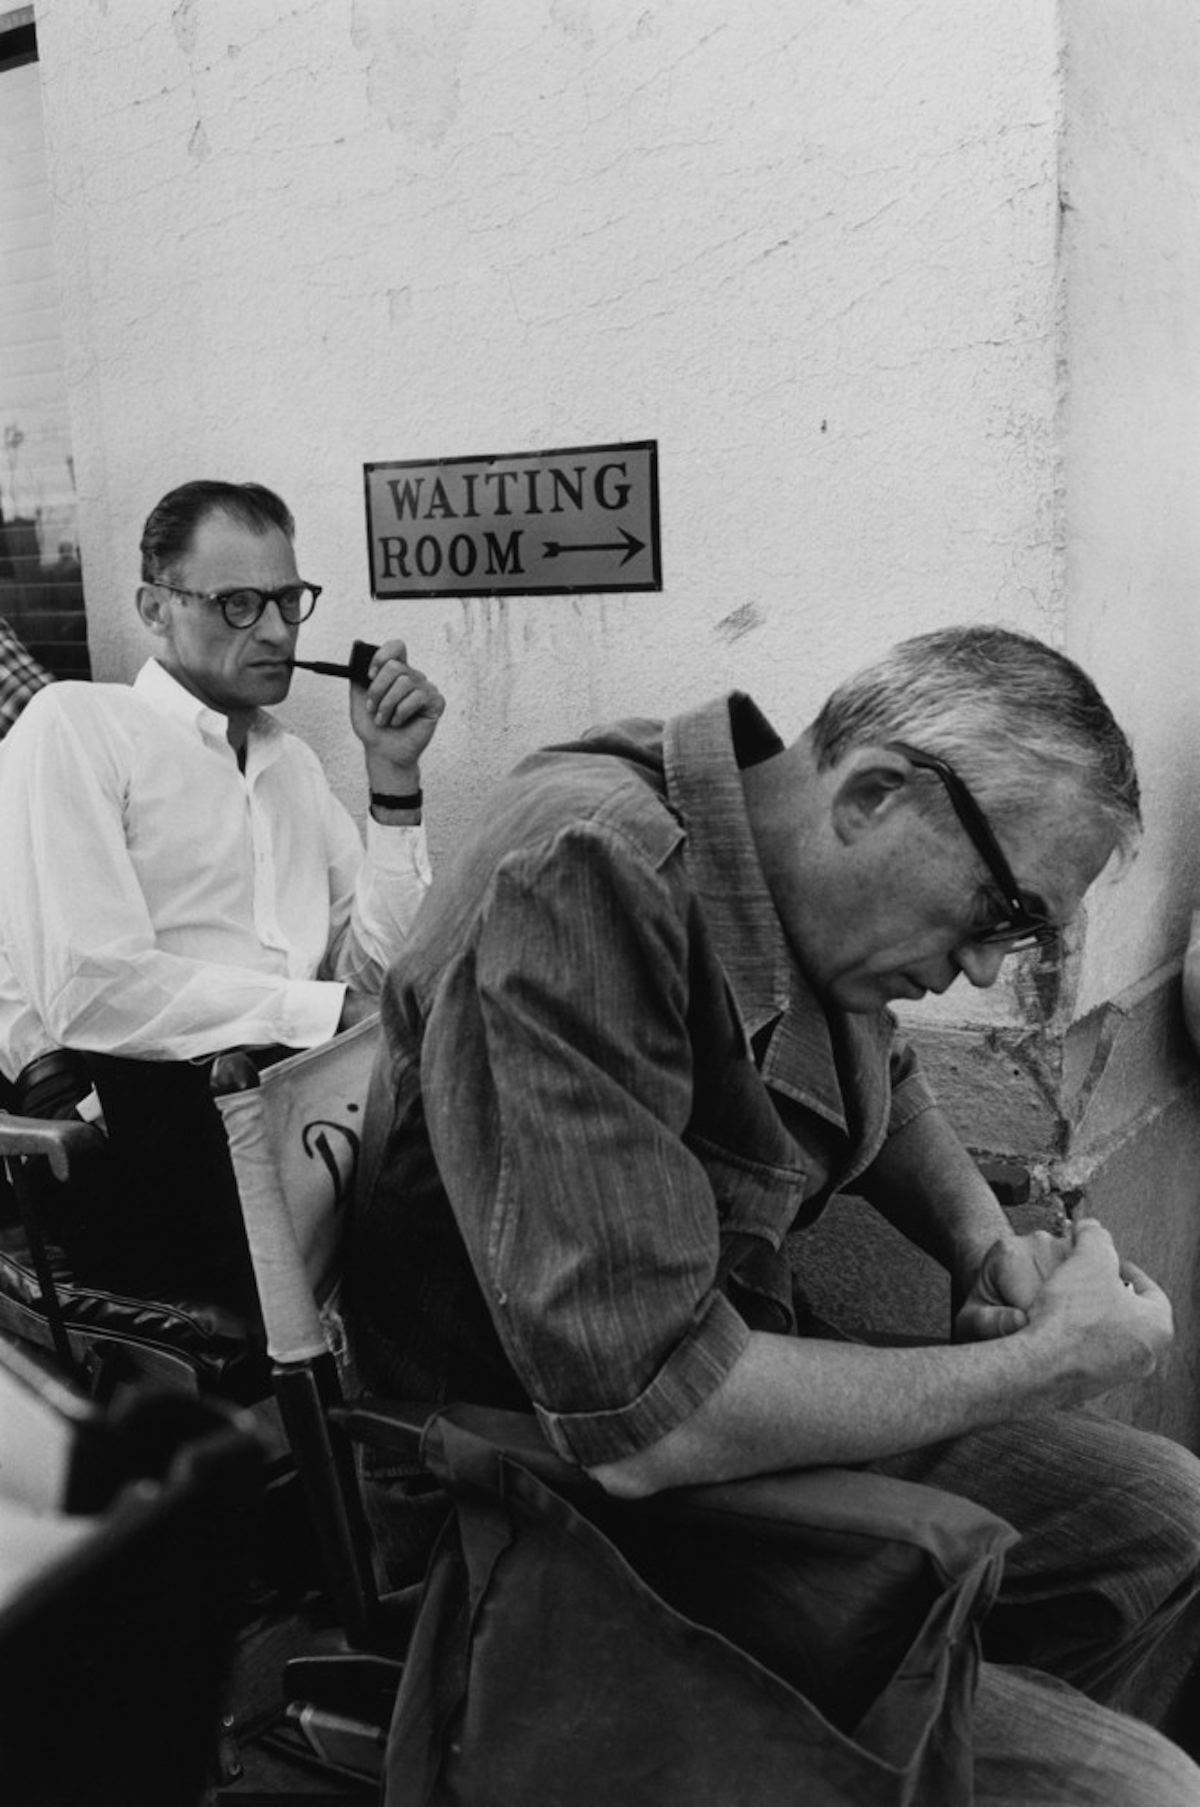 John Huston and Arthur Miller wait and brood over the next scene.